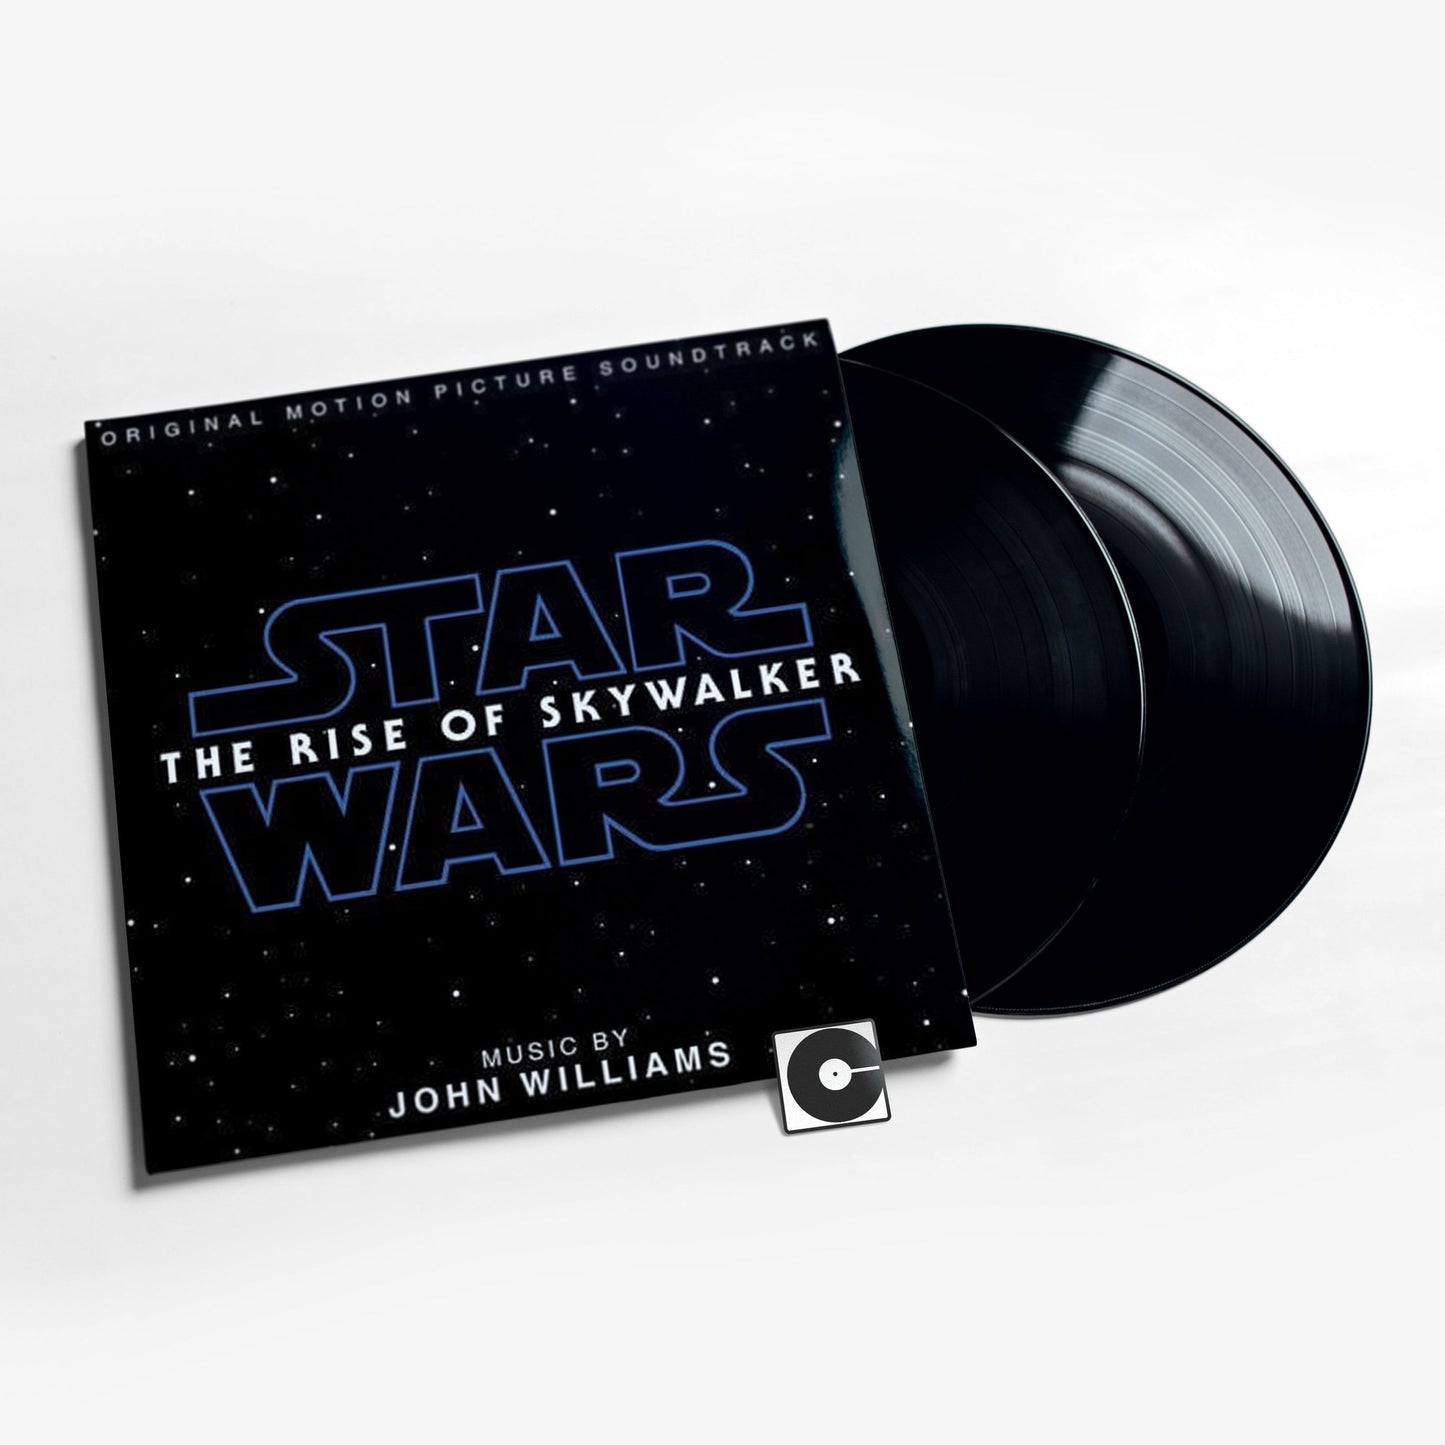 John Williams - "Star Wars Episode IX: The Rise Of Skywalker - Original Motion Picture Soundtrack"